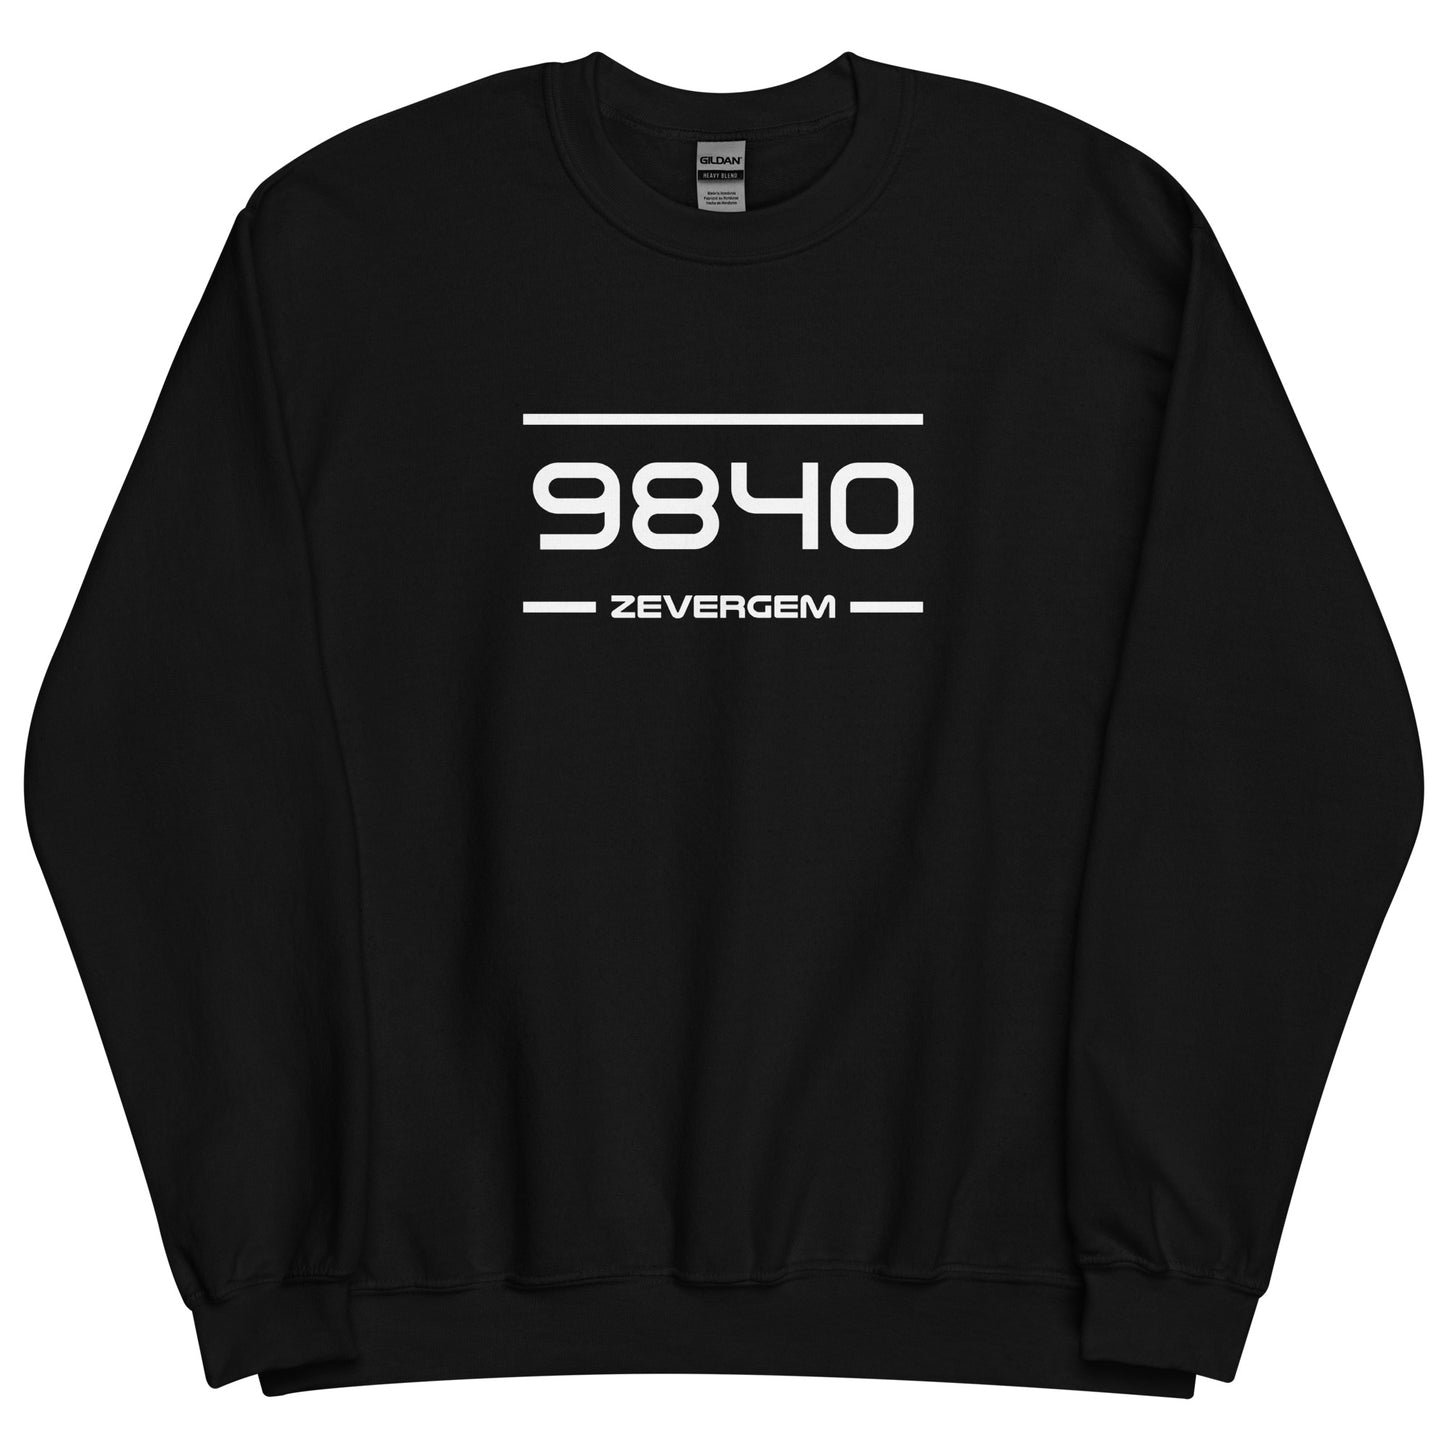 Sweater - 9840 - Zevergem (M/V)